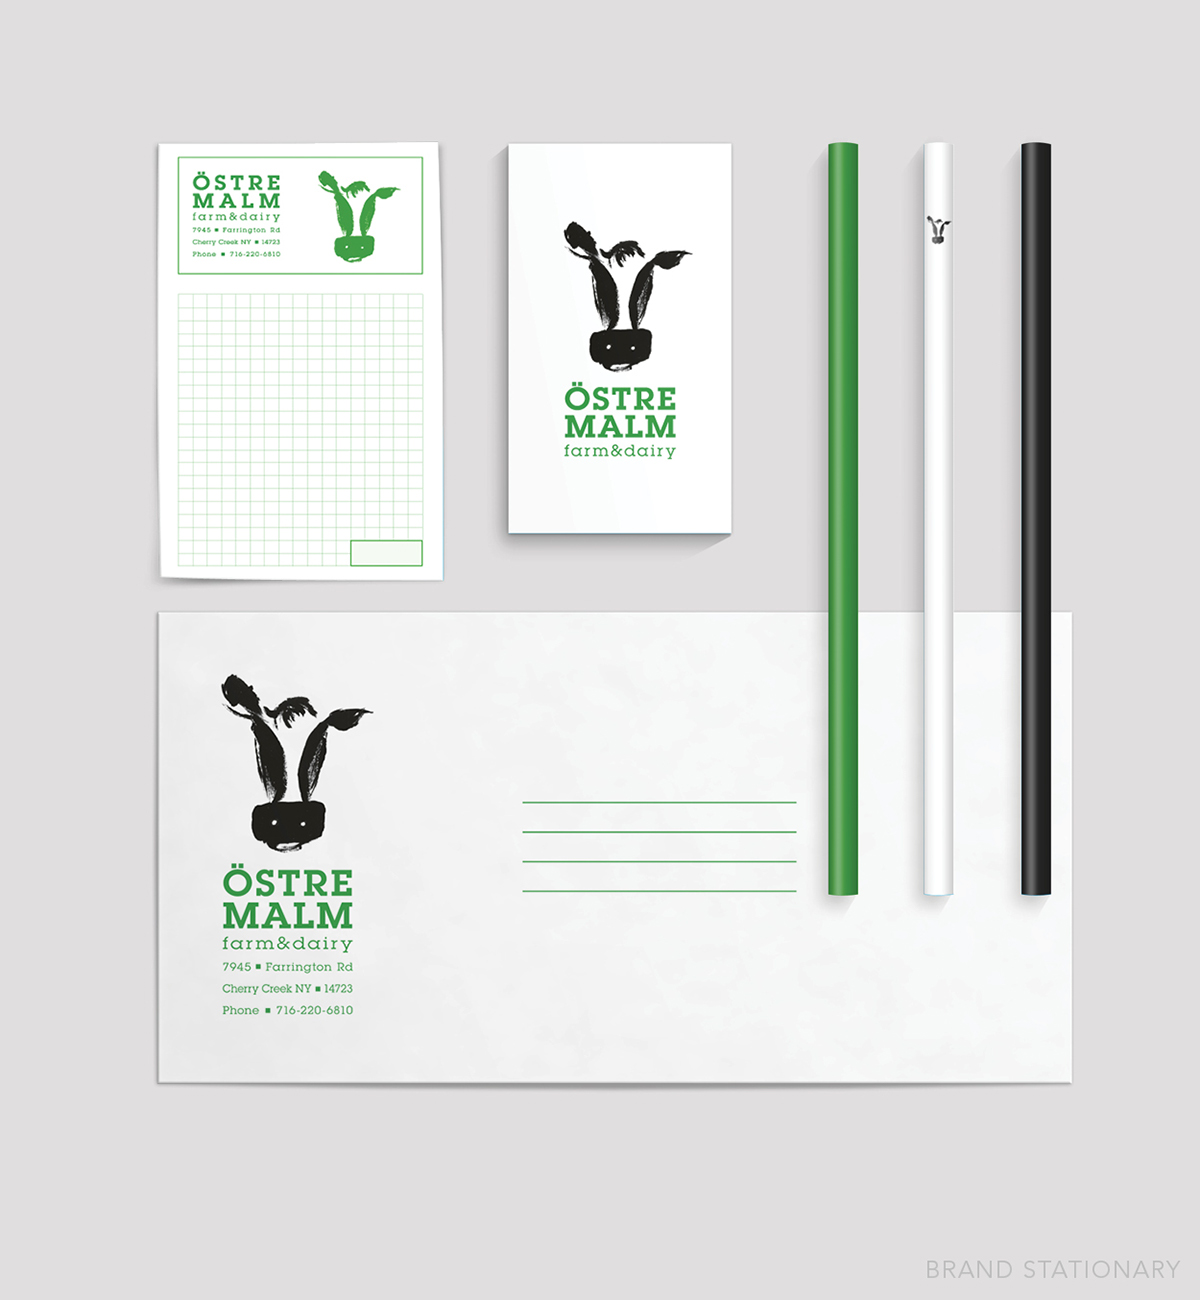 stationary letterhead invoice envelope cow logo identity farm Dairy milk bottle organic business card